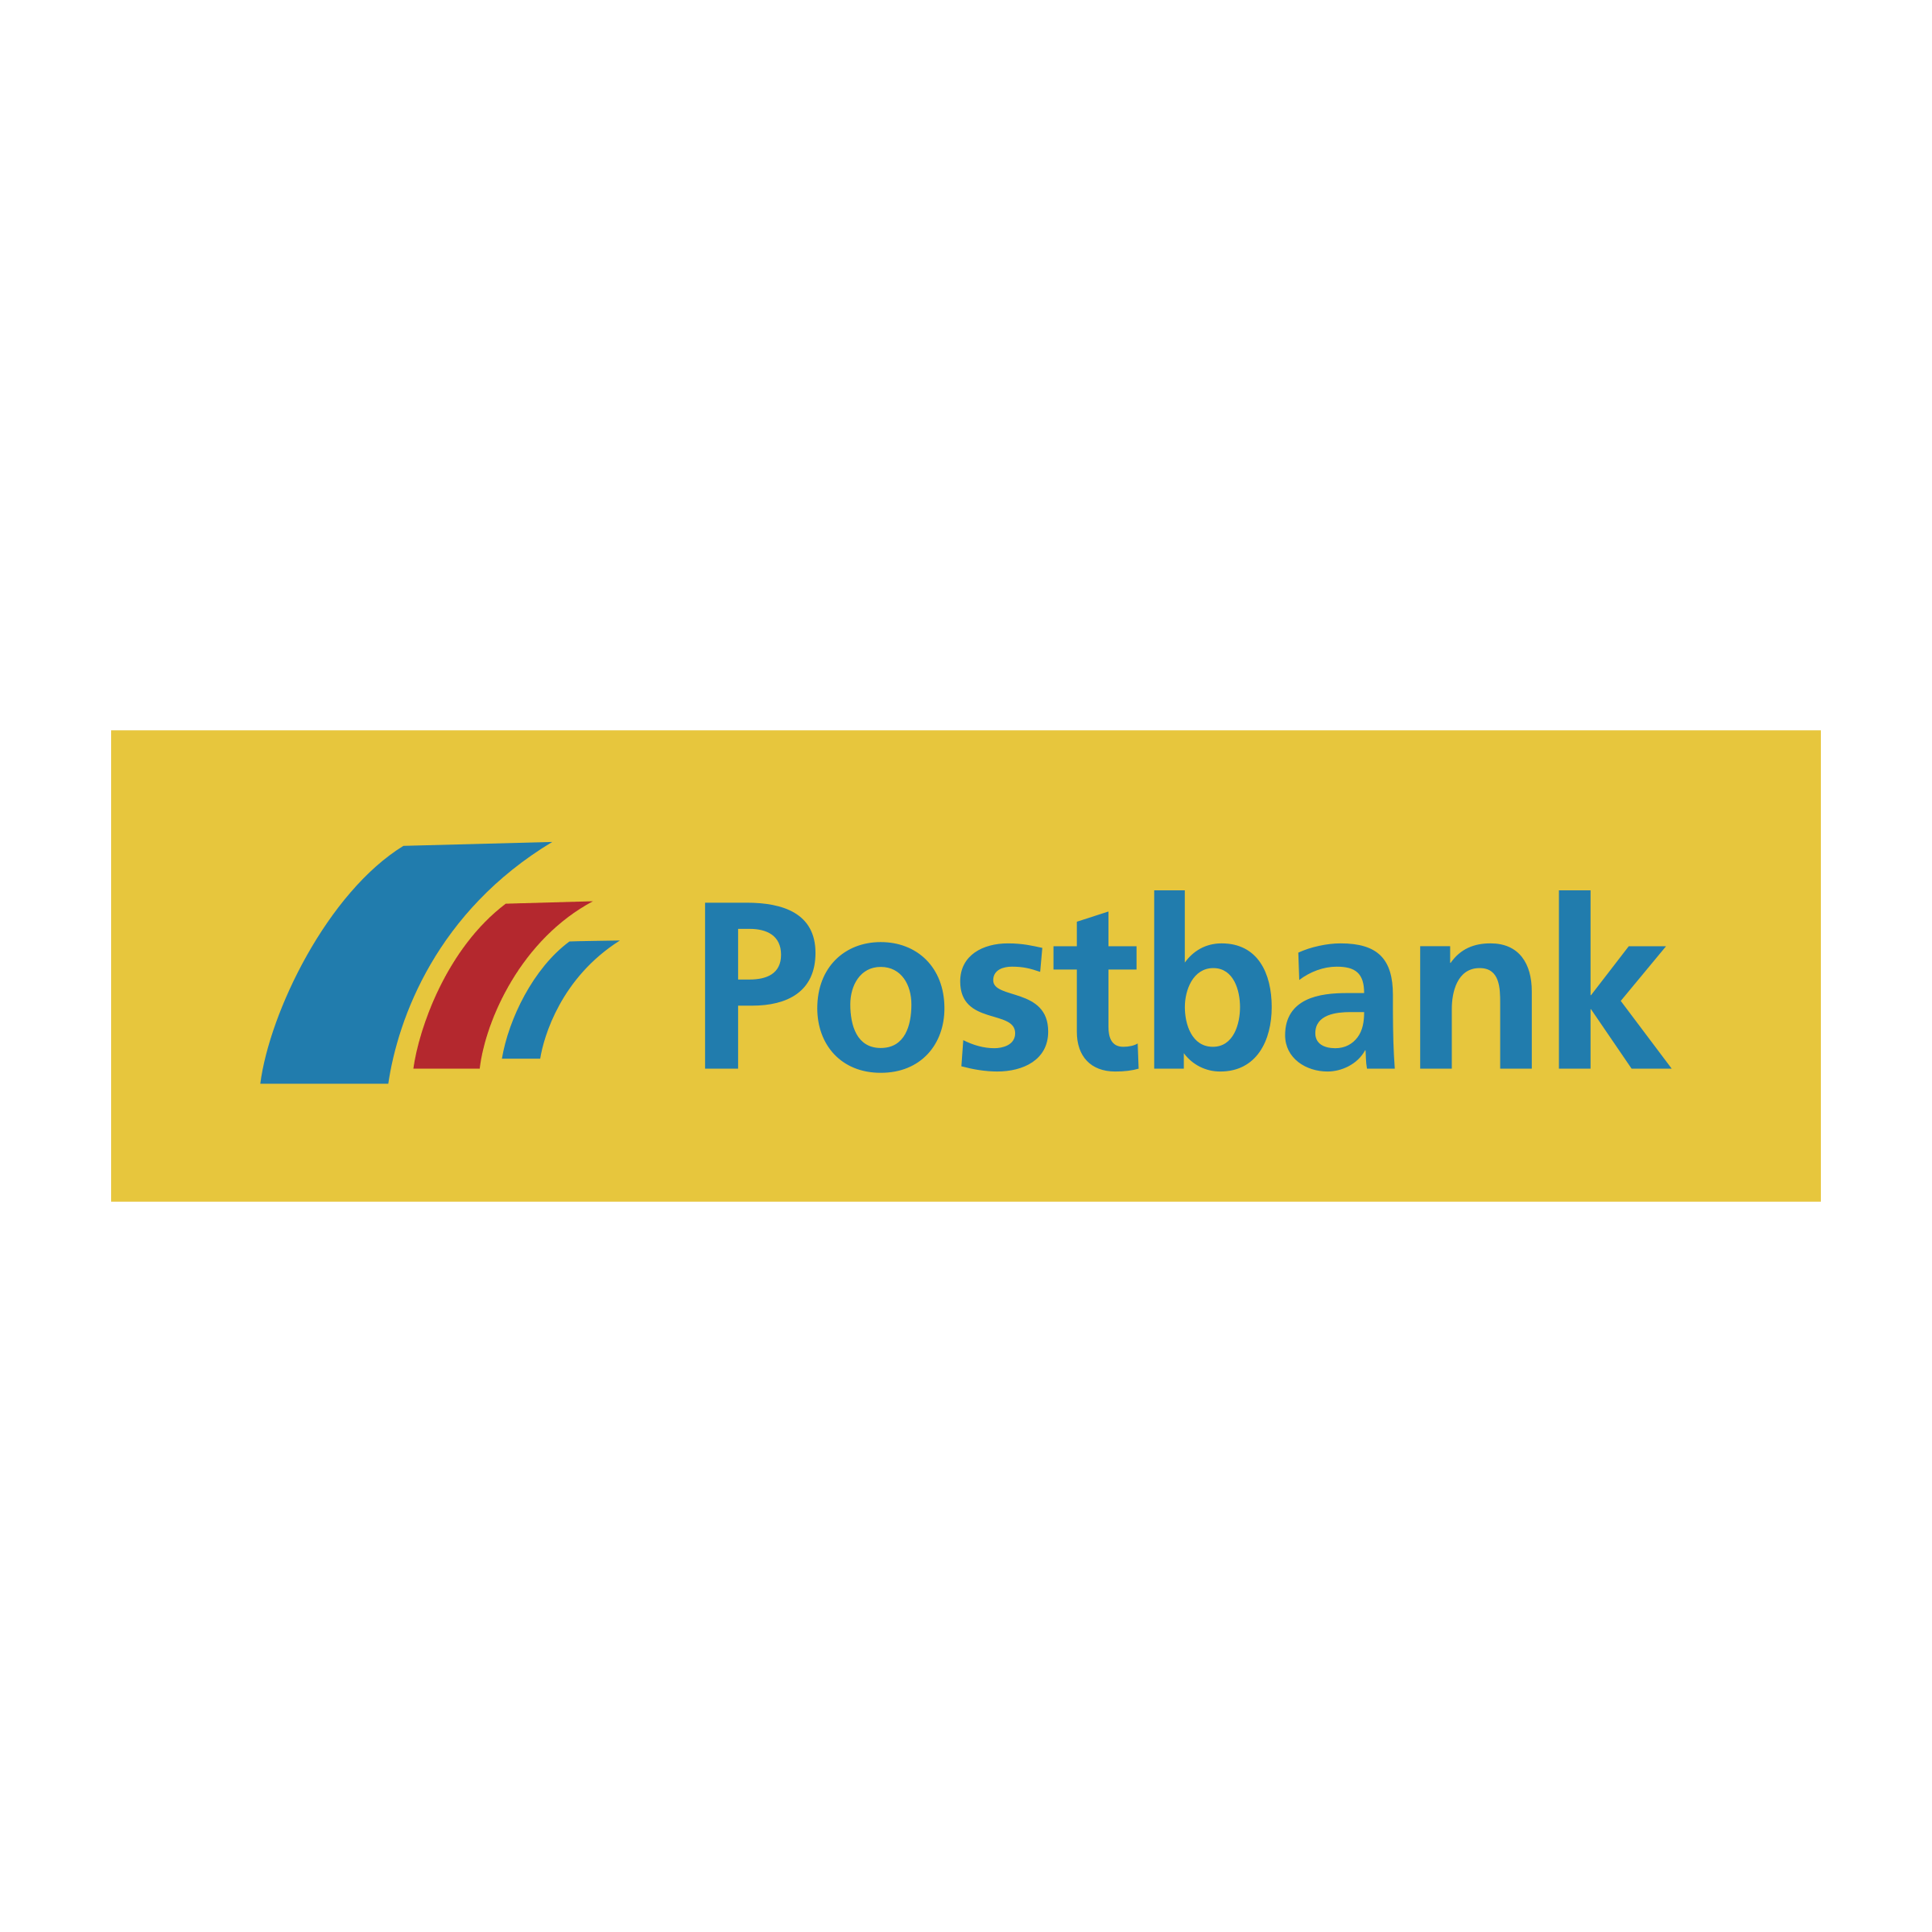 Postbank Logo - Postbank Logo PNG Transparent & SVG Vector - Freebie Supply